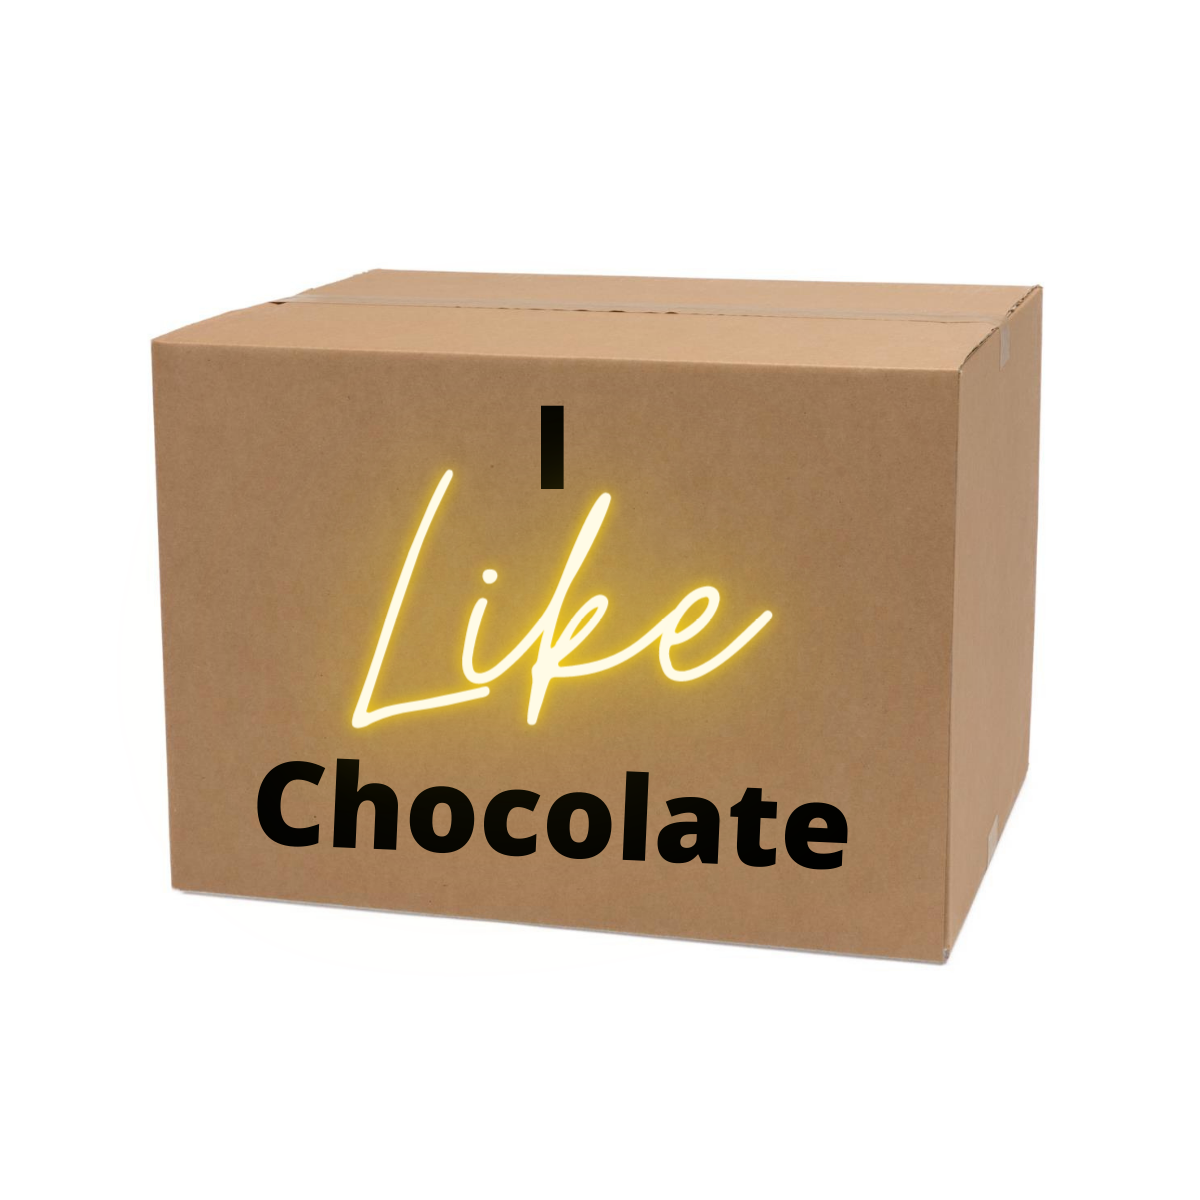 I Like Chocolate Subscription Box